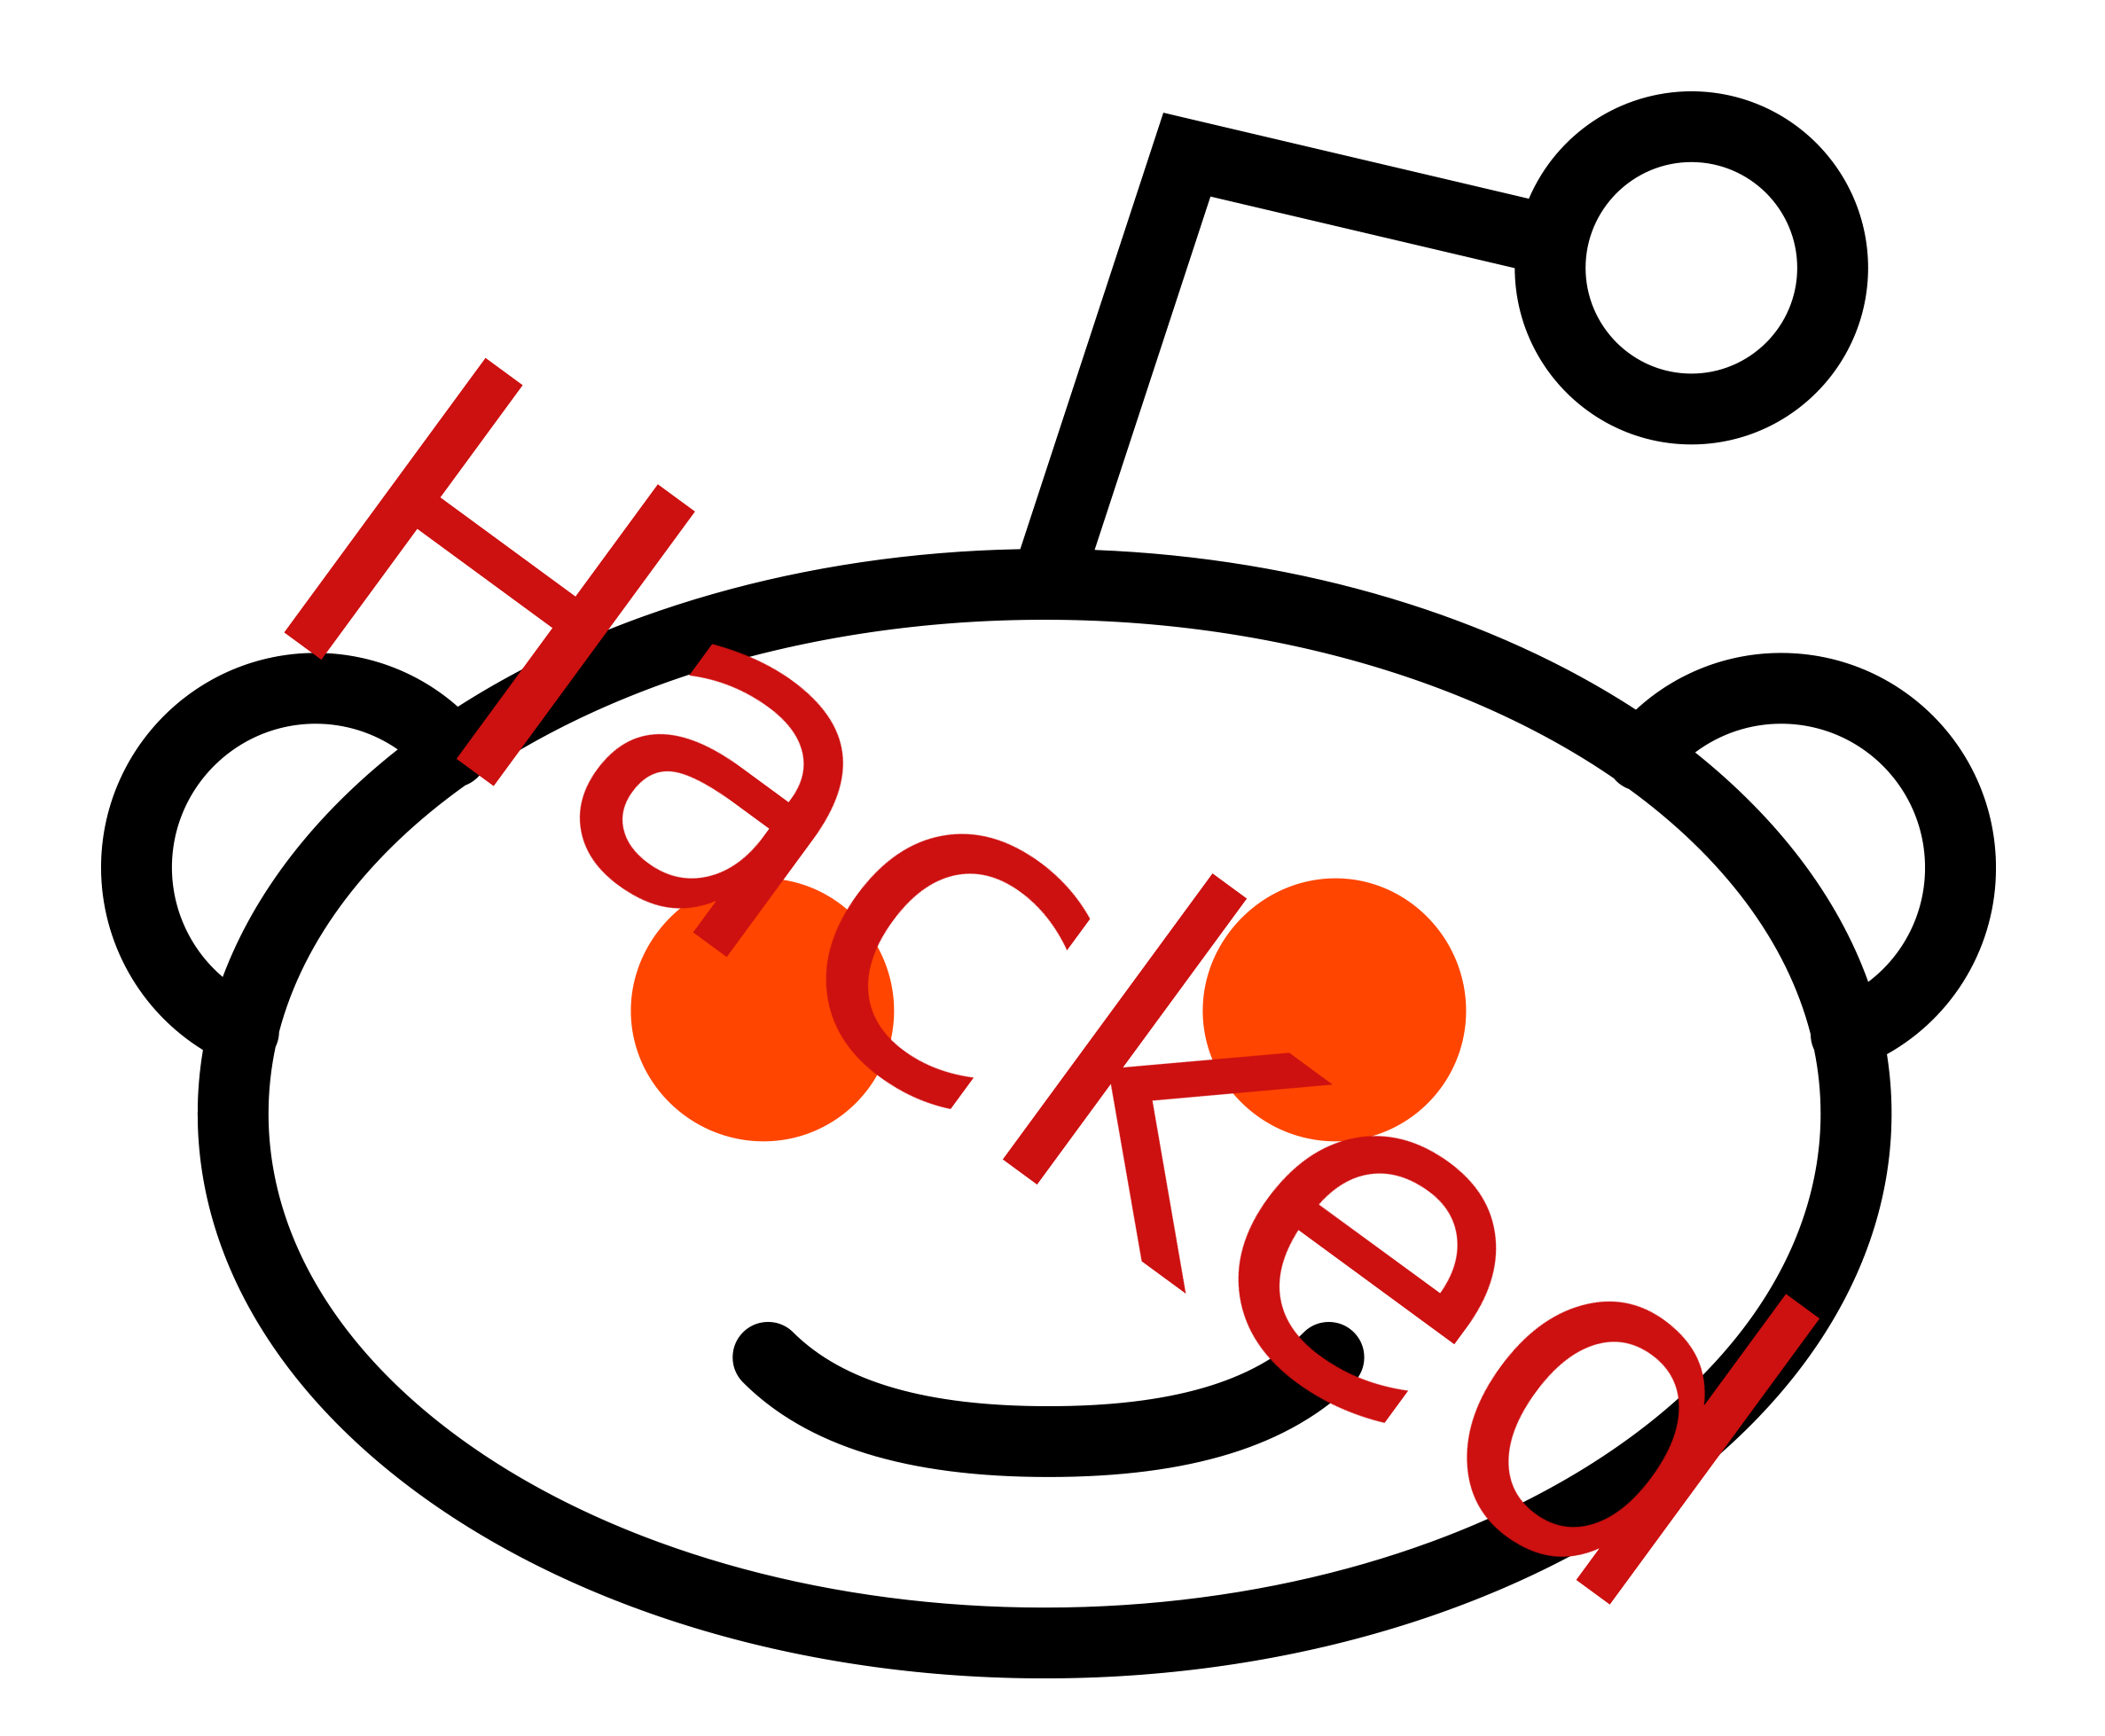 Reddit Hacked